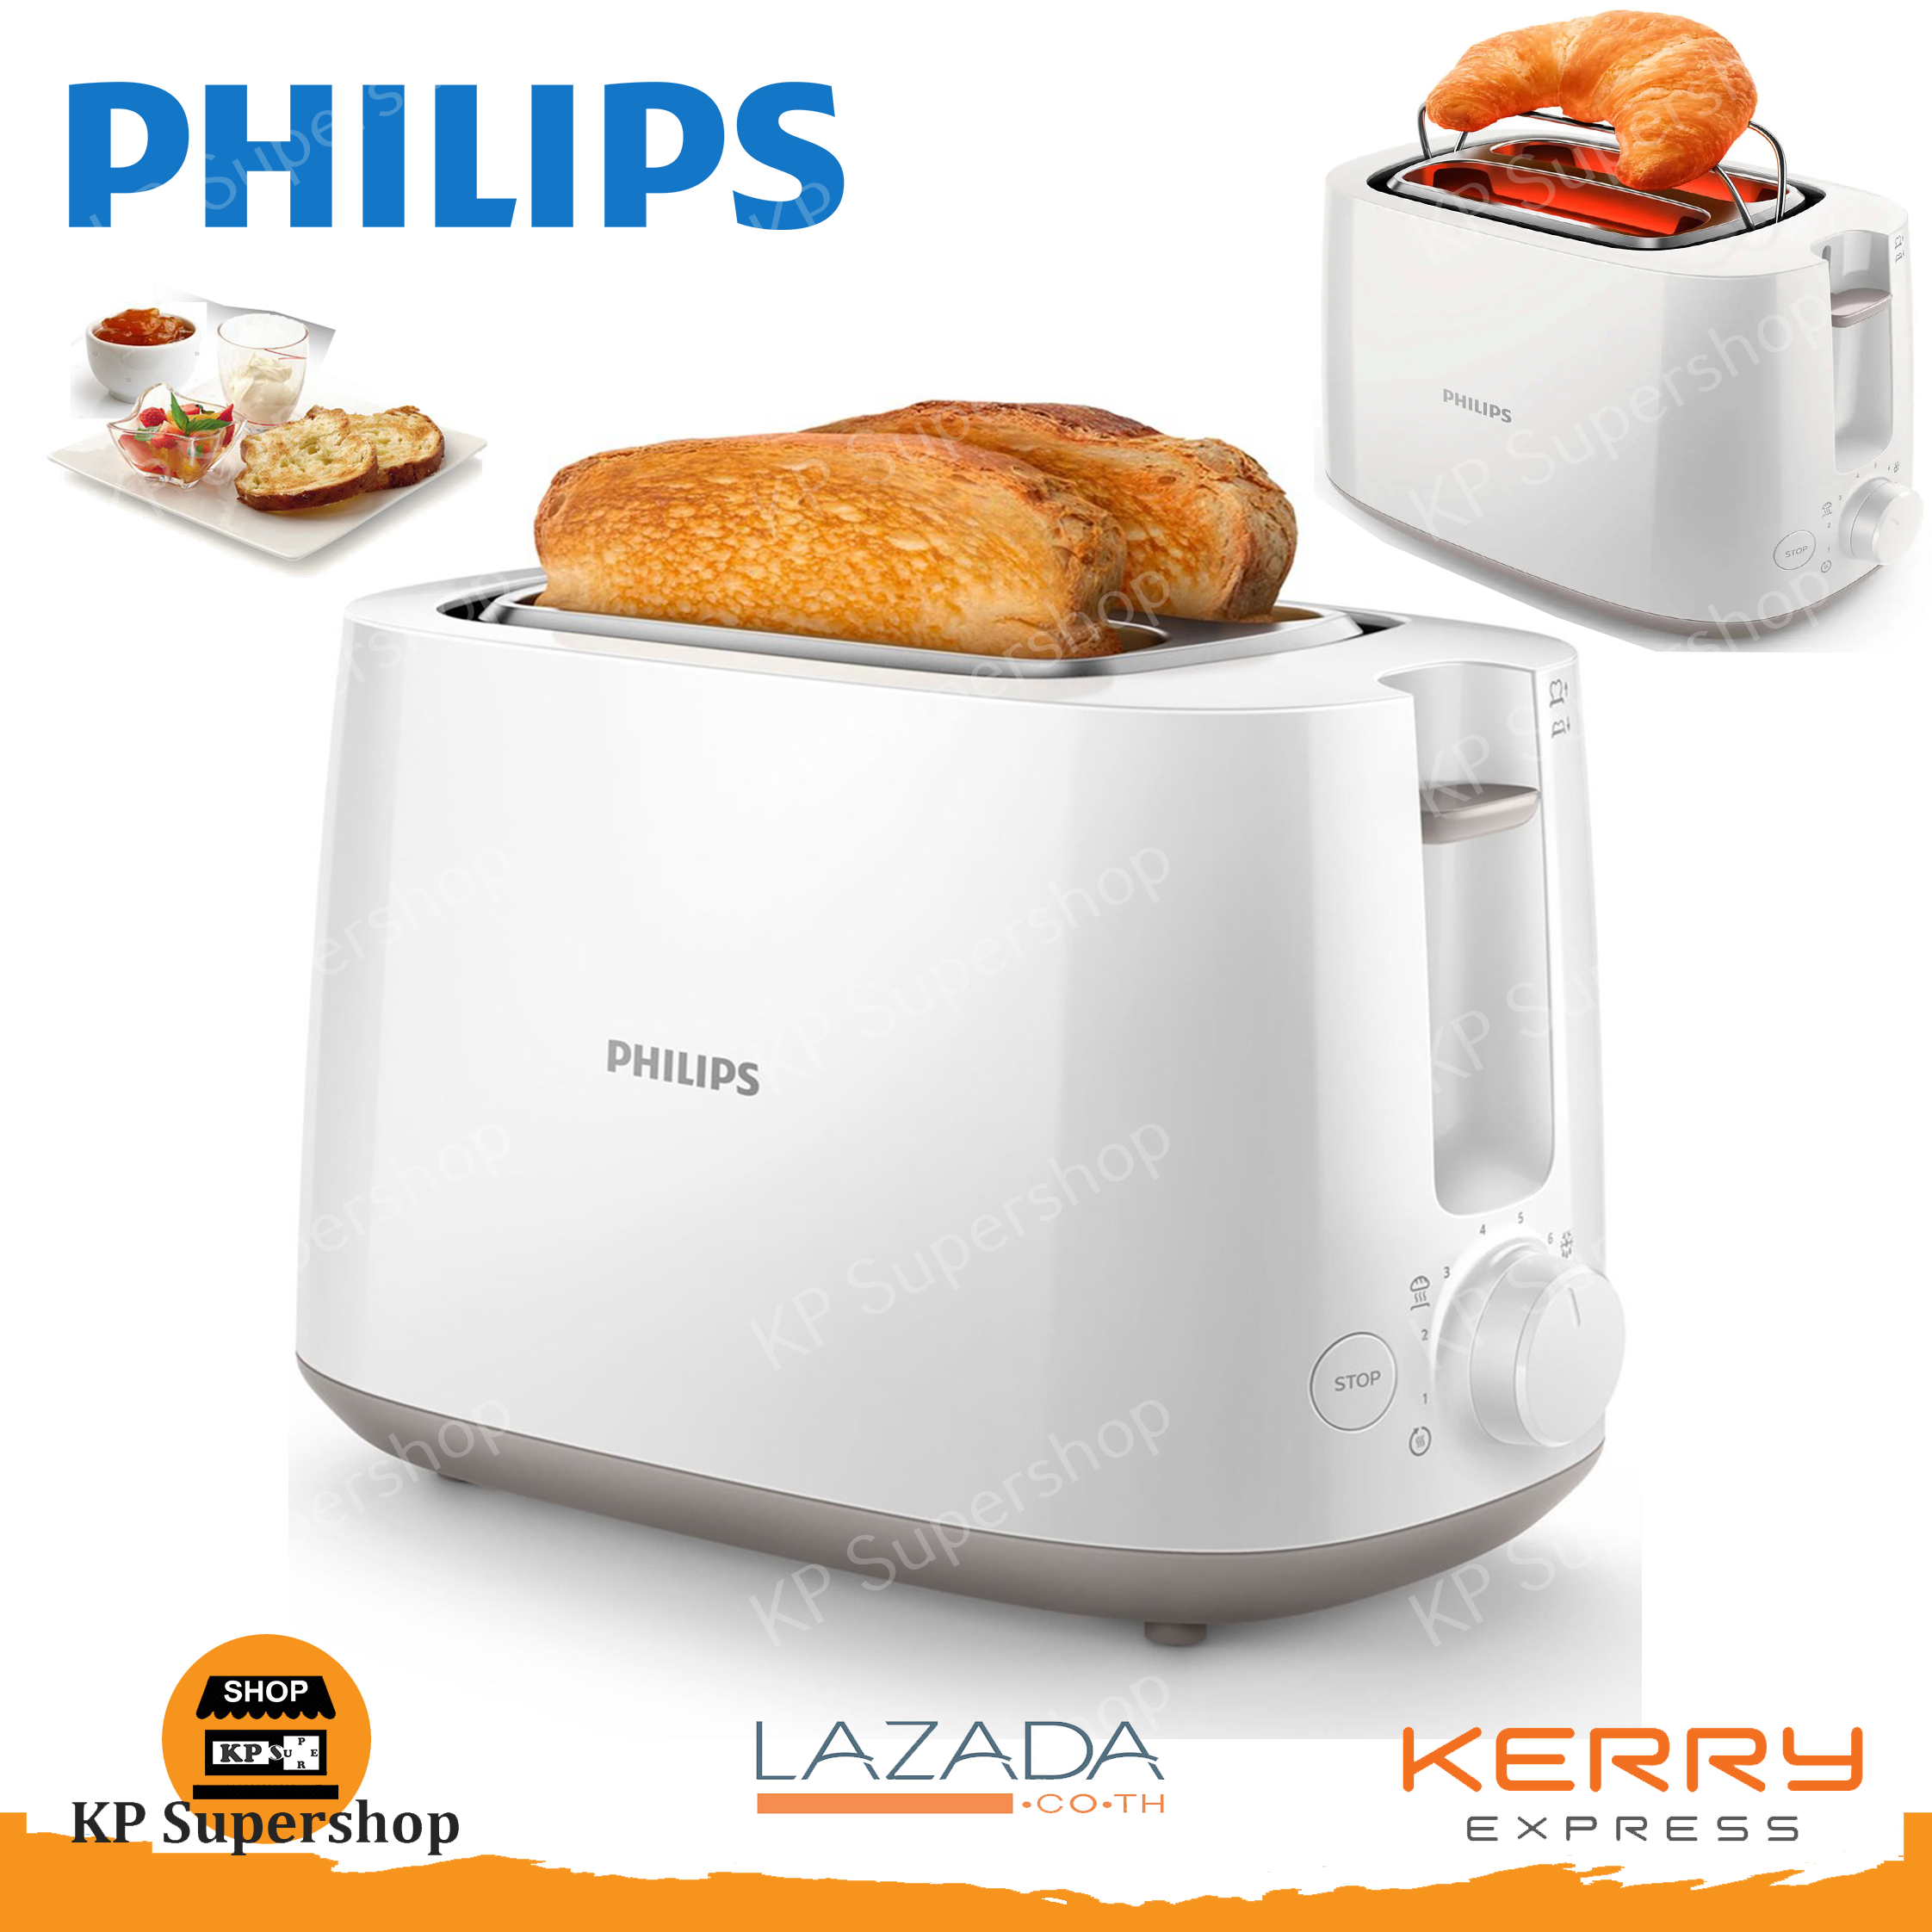 PHILIPS(ฟิลิปส์) เครื่องปิ้งขนมปัง Toaster รุ่น HD2581/00